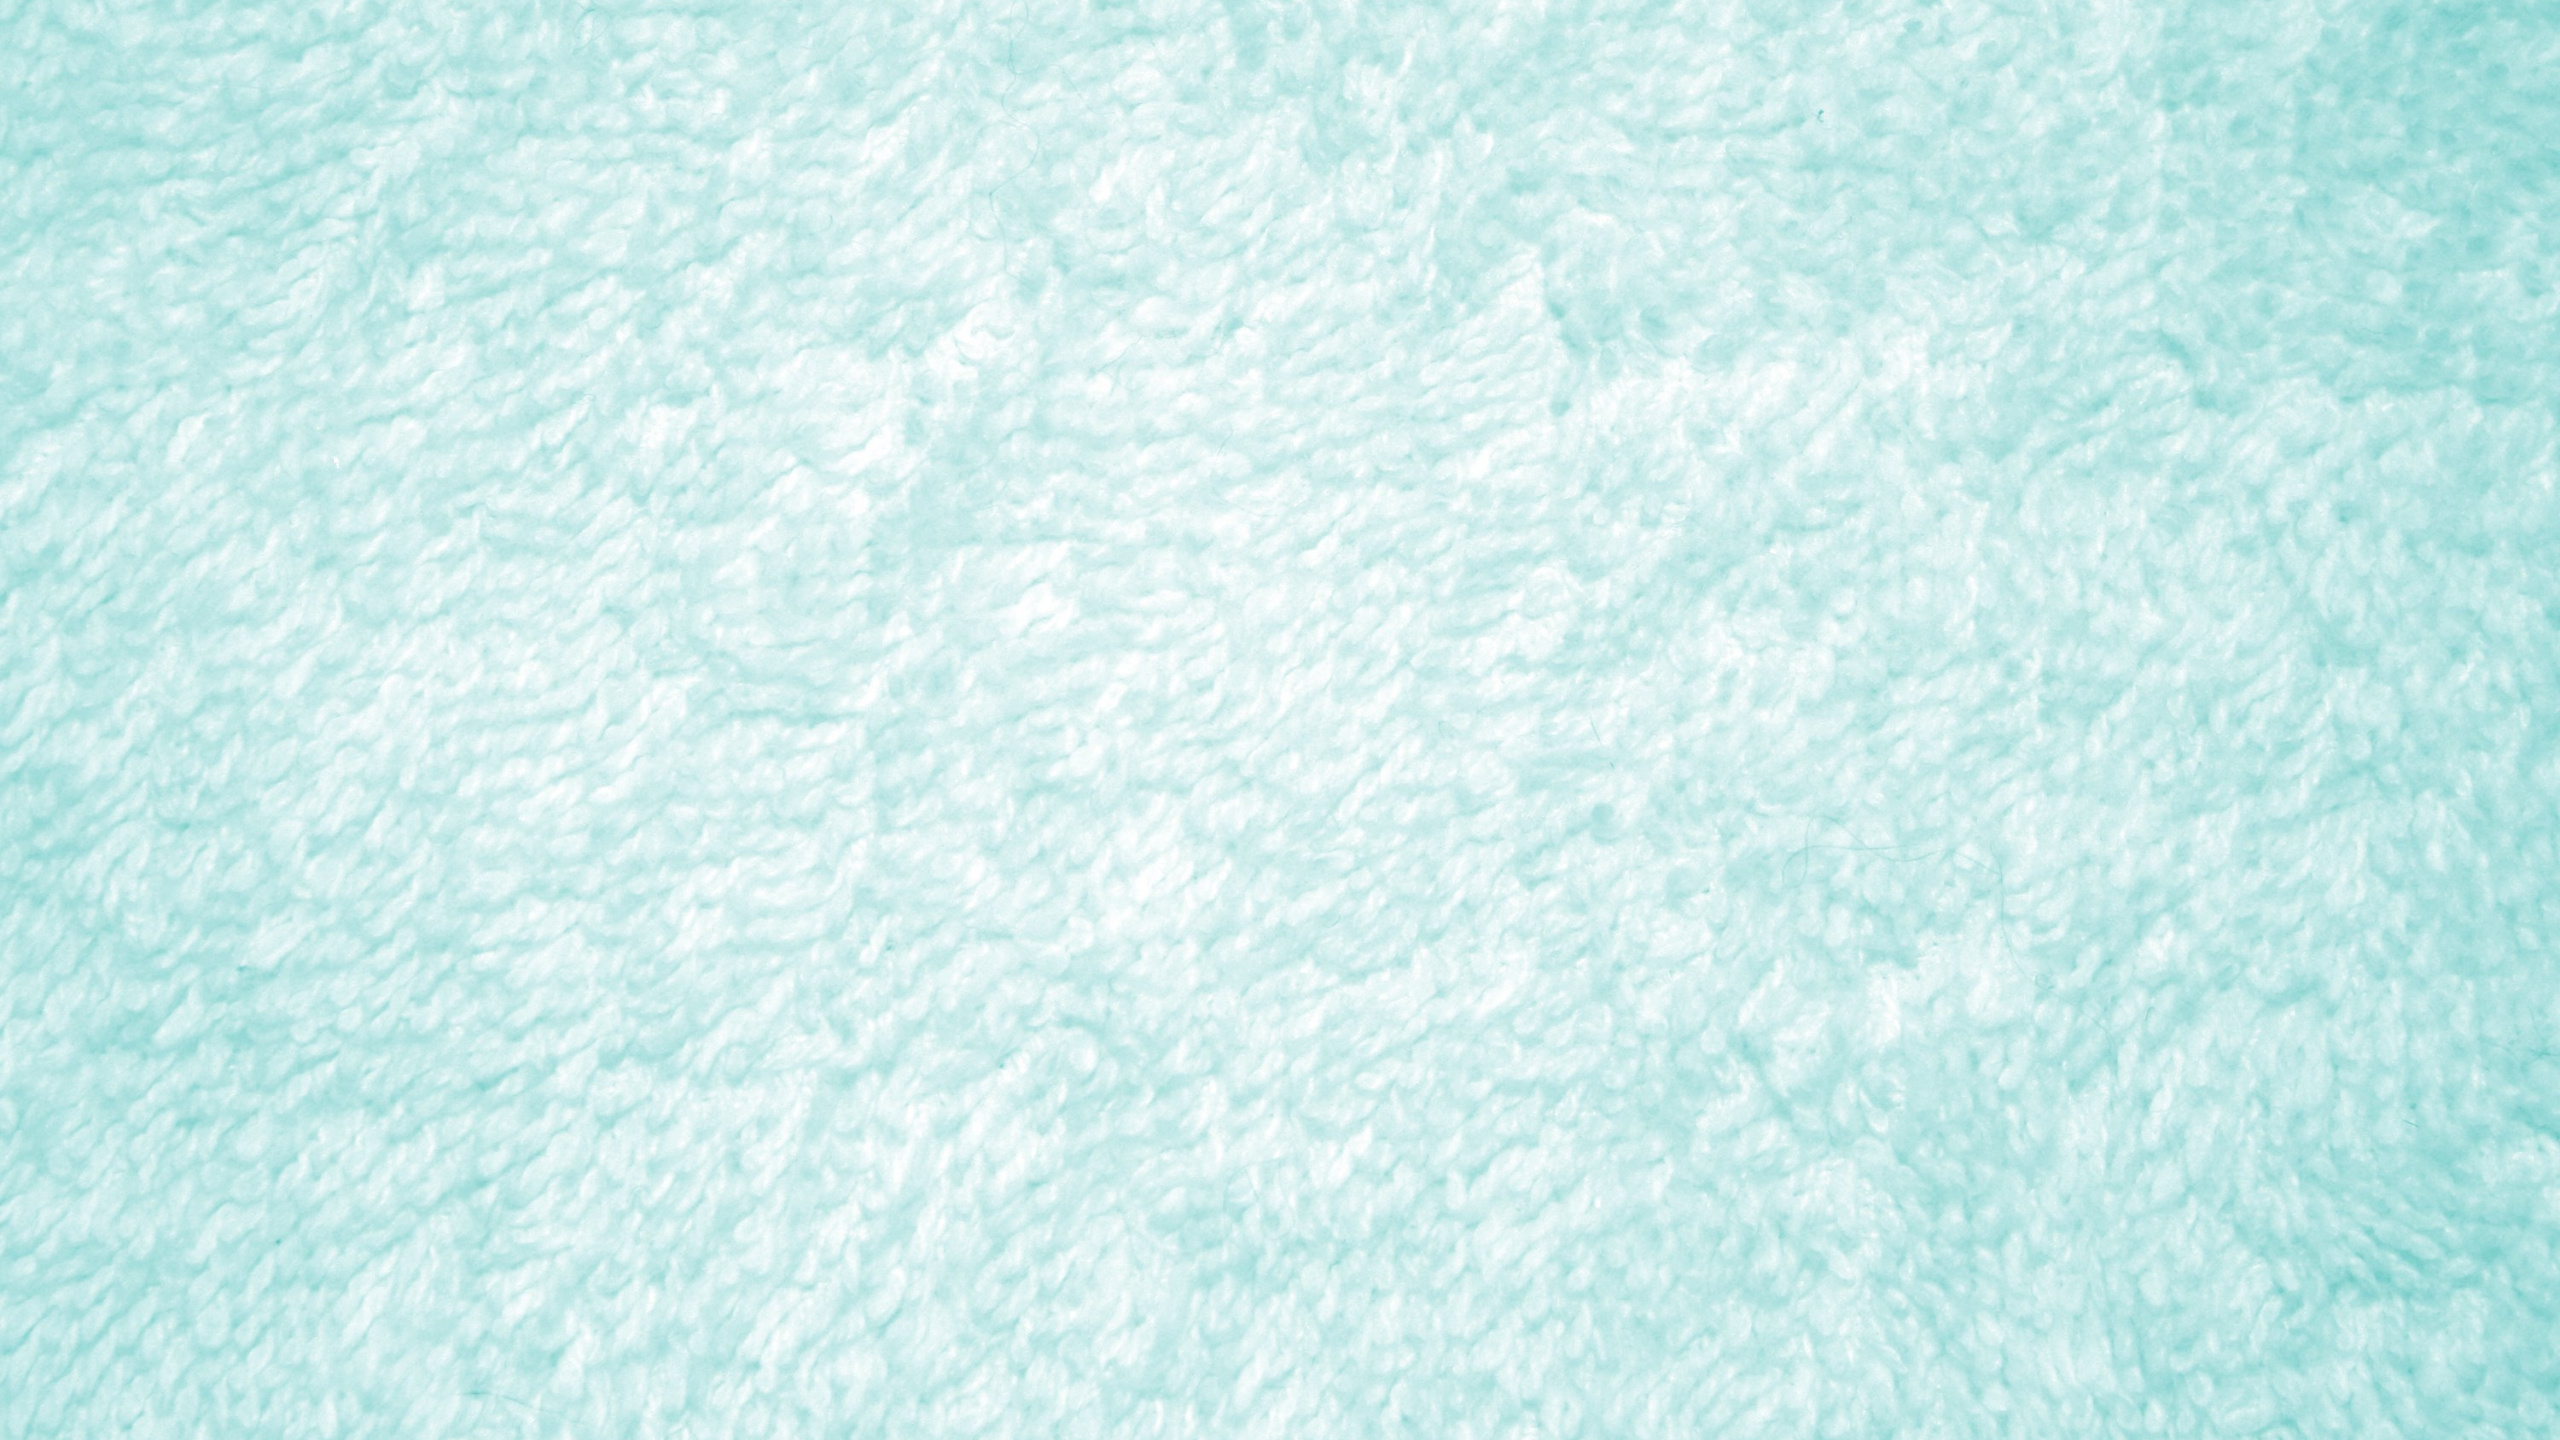 Textile Vert en Gros Plan Image. Wallpaper in 2560x1440 Resolution